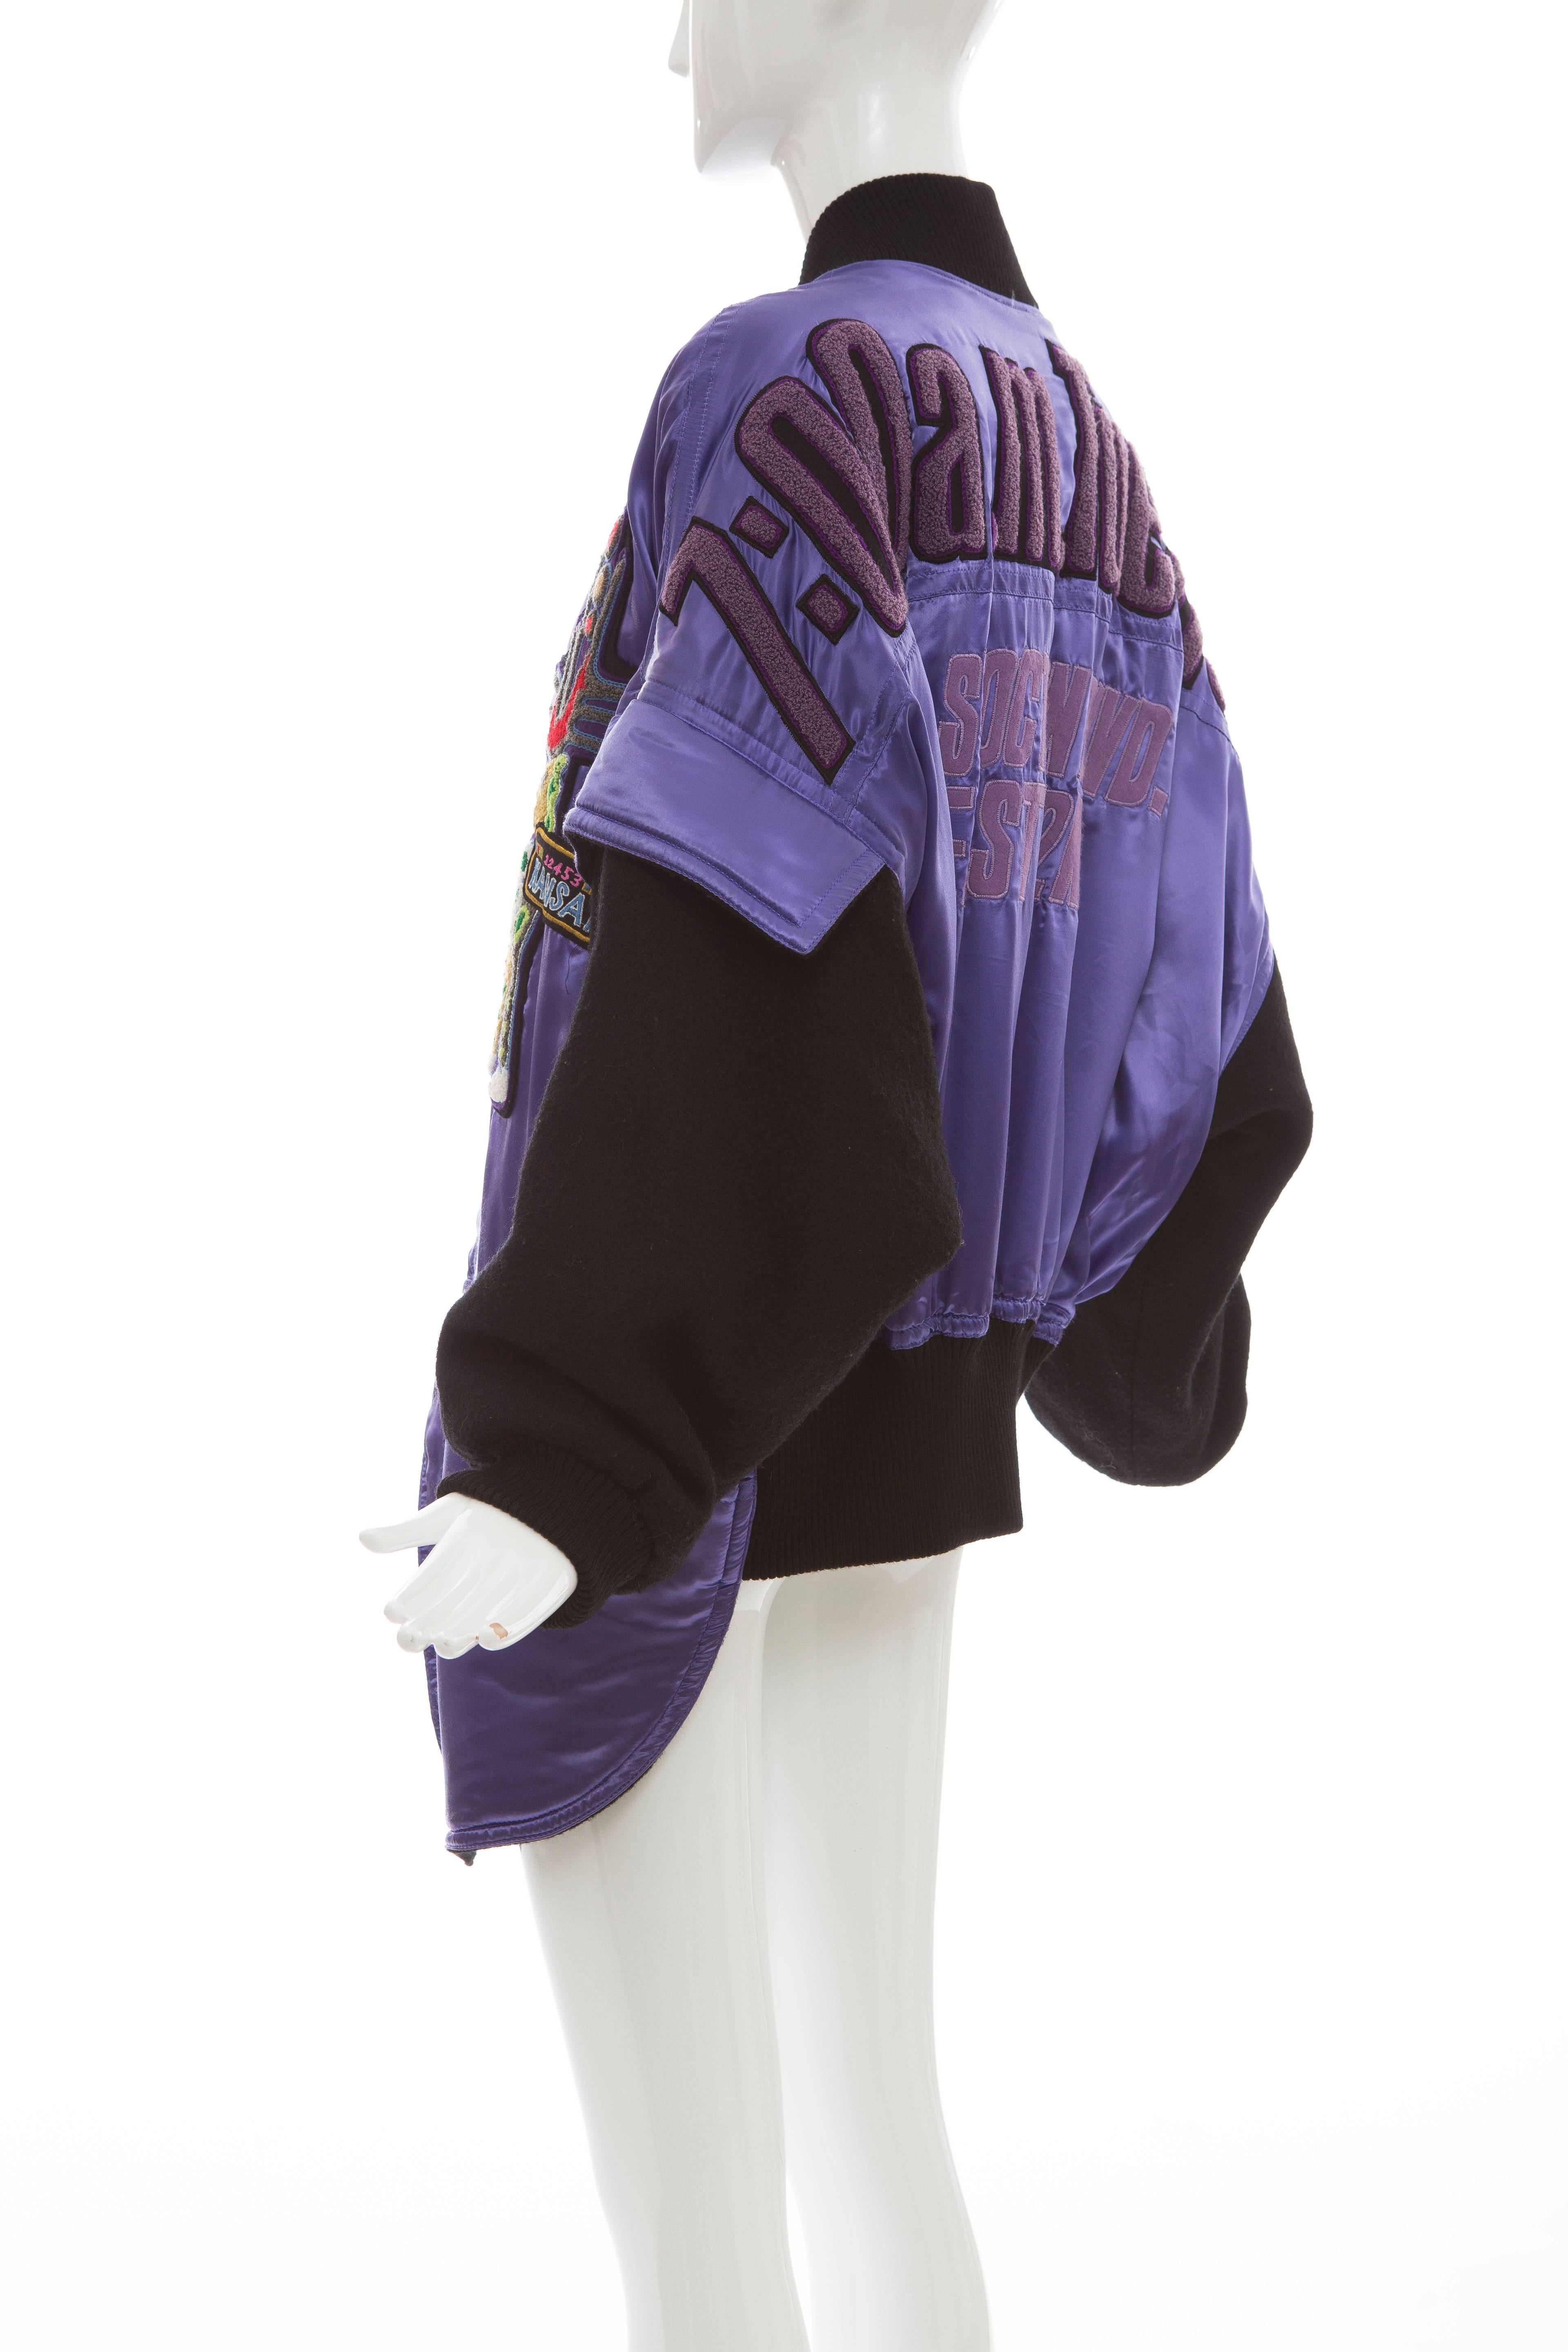 Kansai Yamamoto Purple Satin Jacket With Appliquéd Patches, Circa 1980's For Sale 3